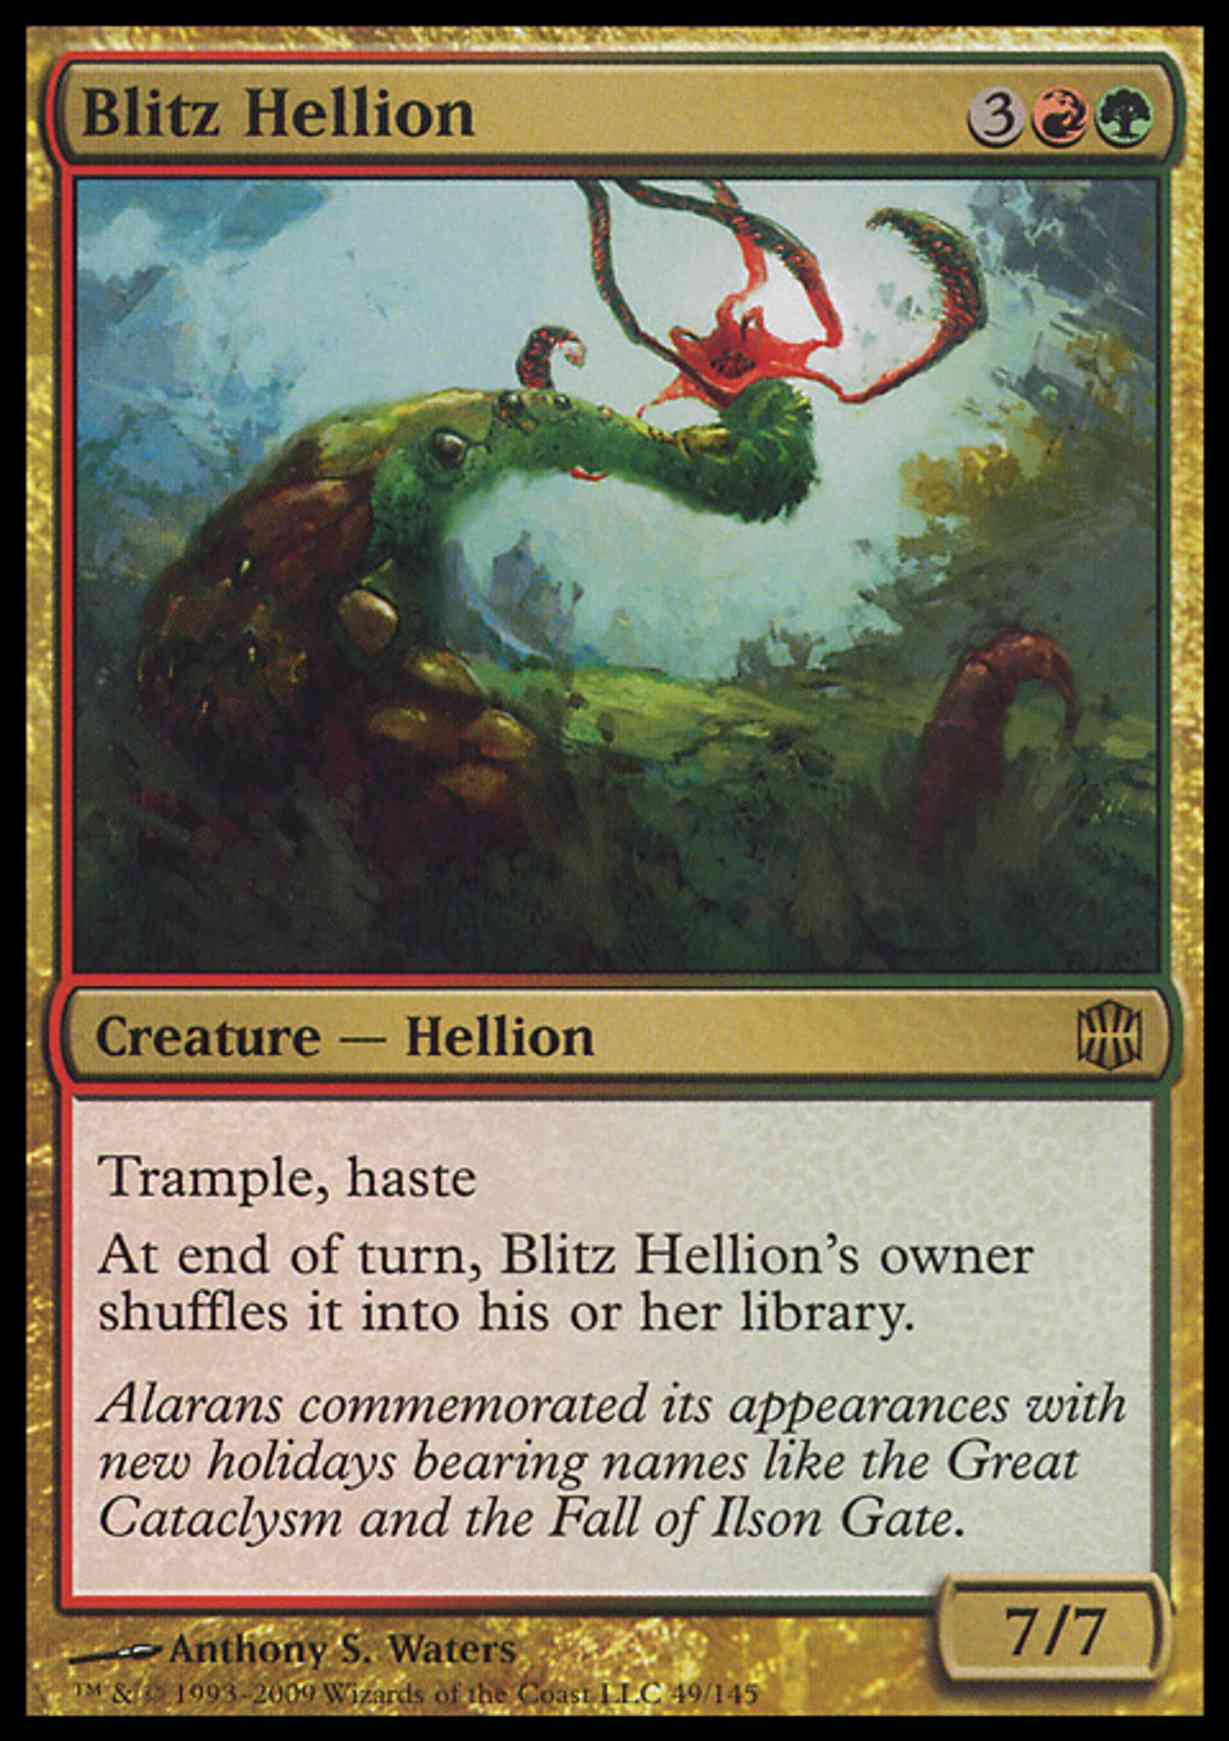 Blitz Hellion magic card front